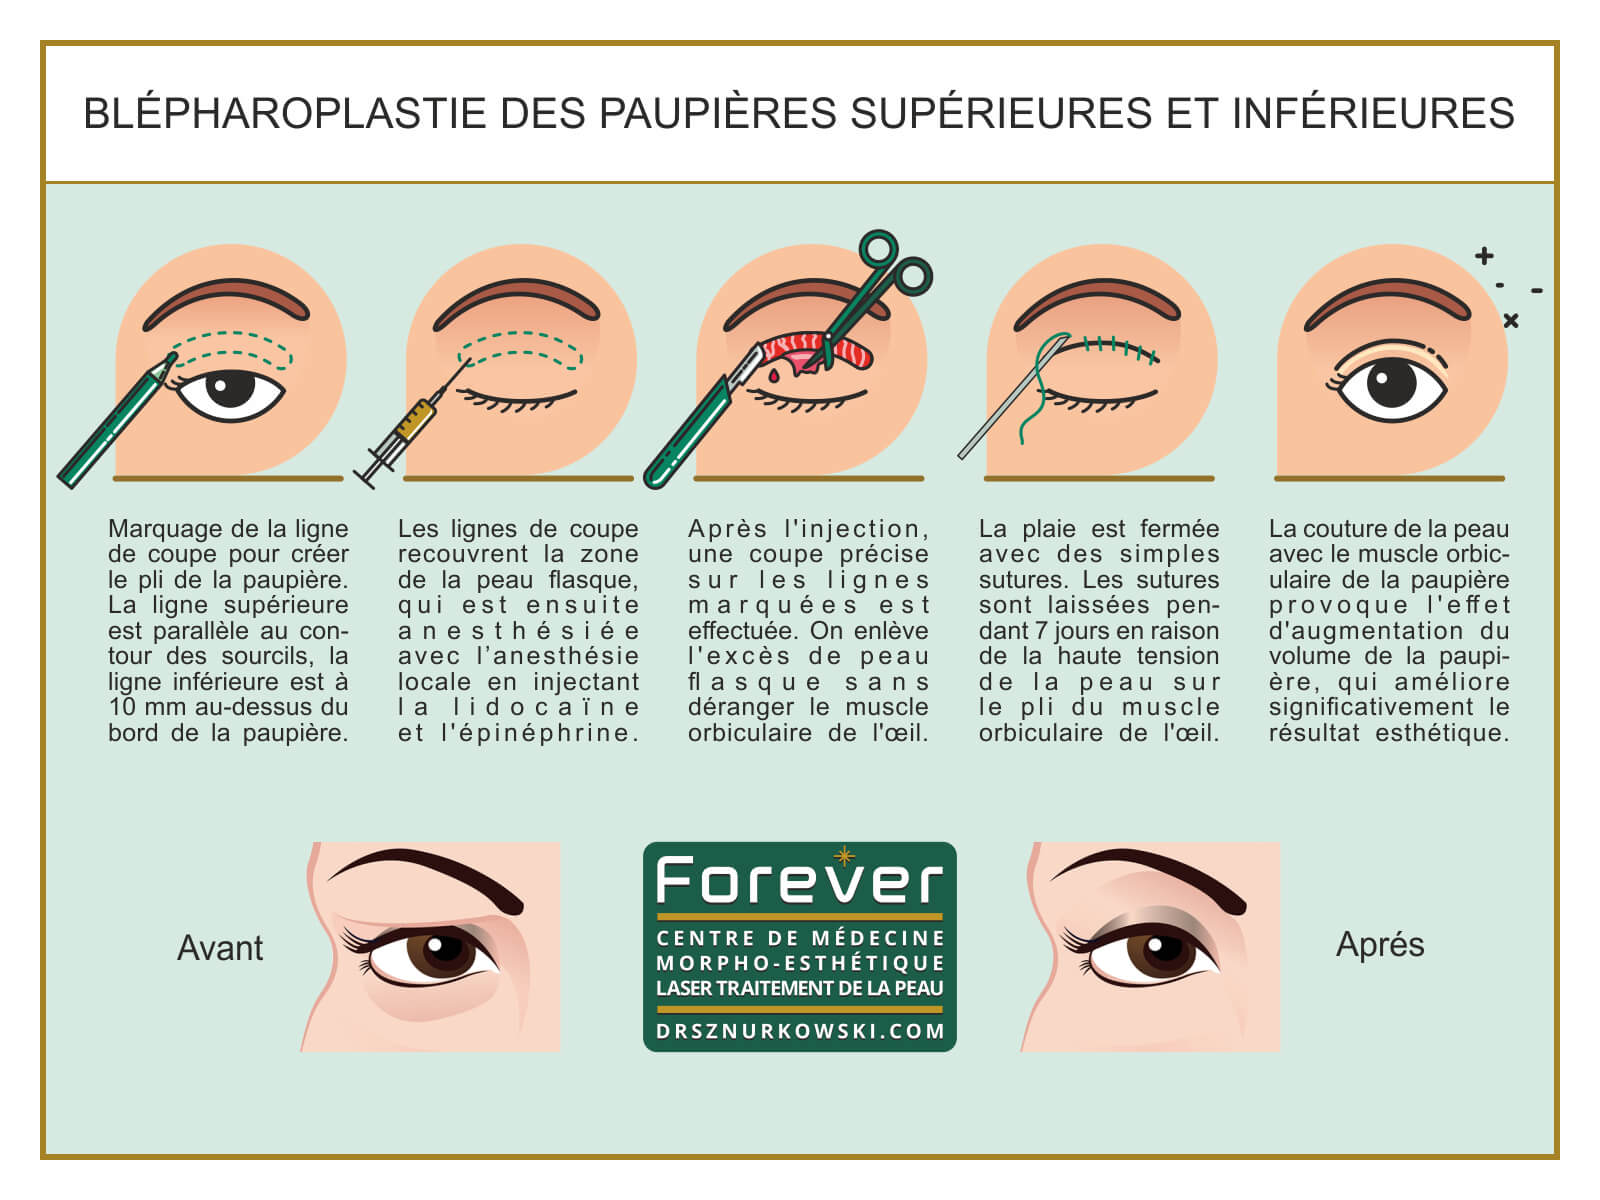 Blepharoplasty - Removing The Excess of Limp Skin From Eyelids (80x60) FR.jpg